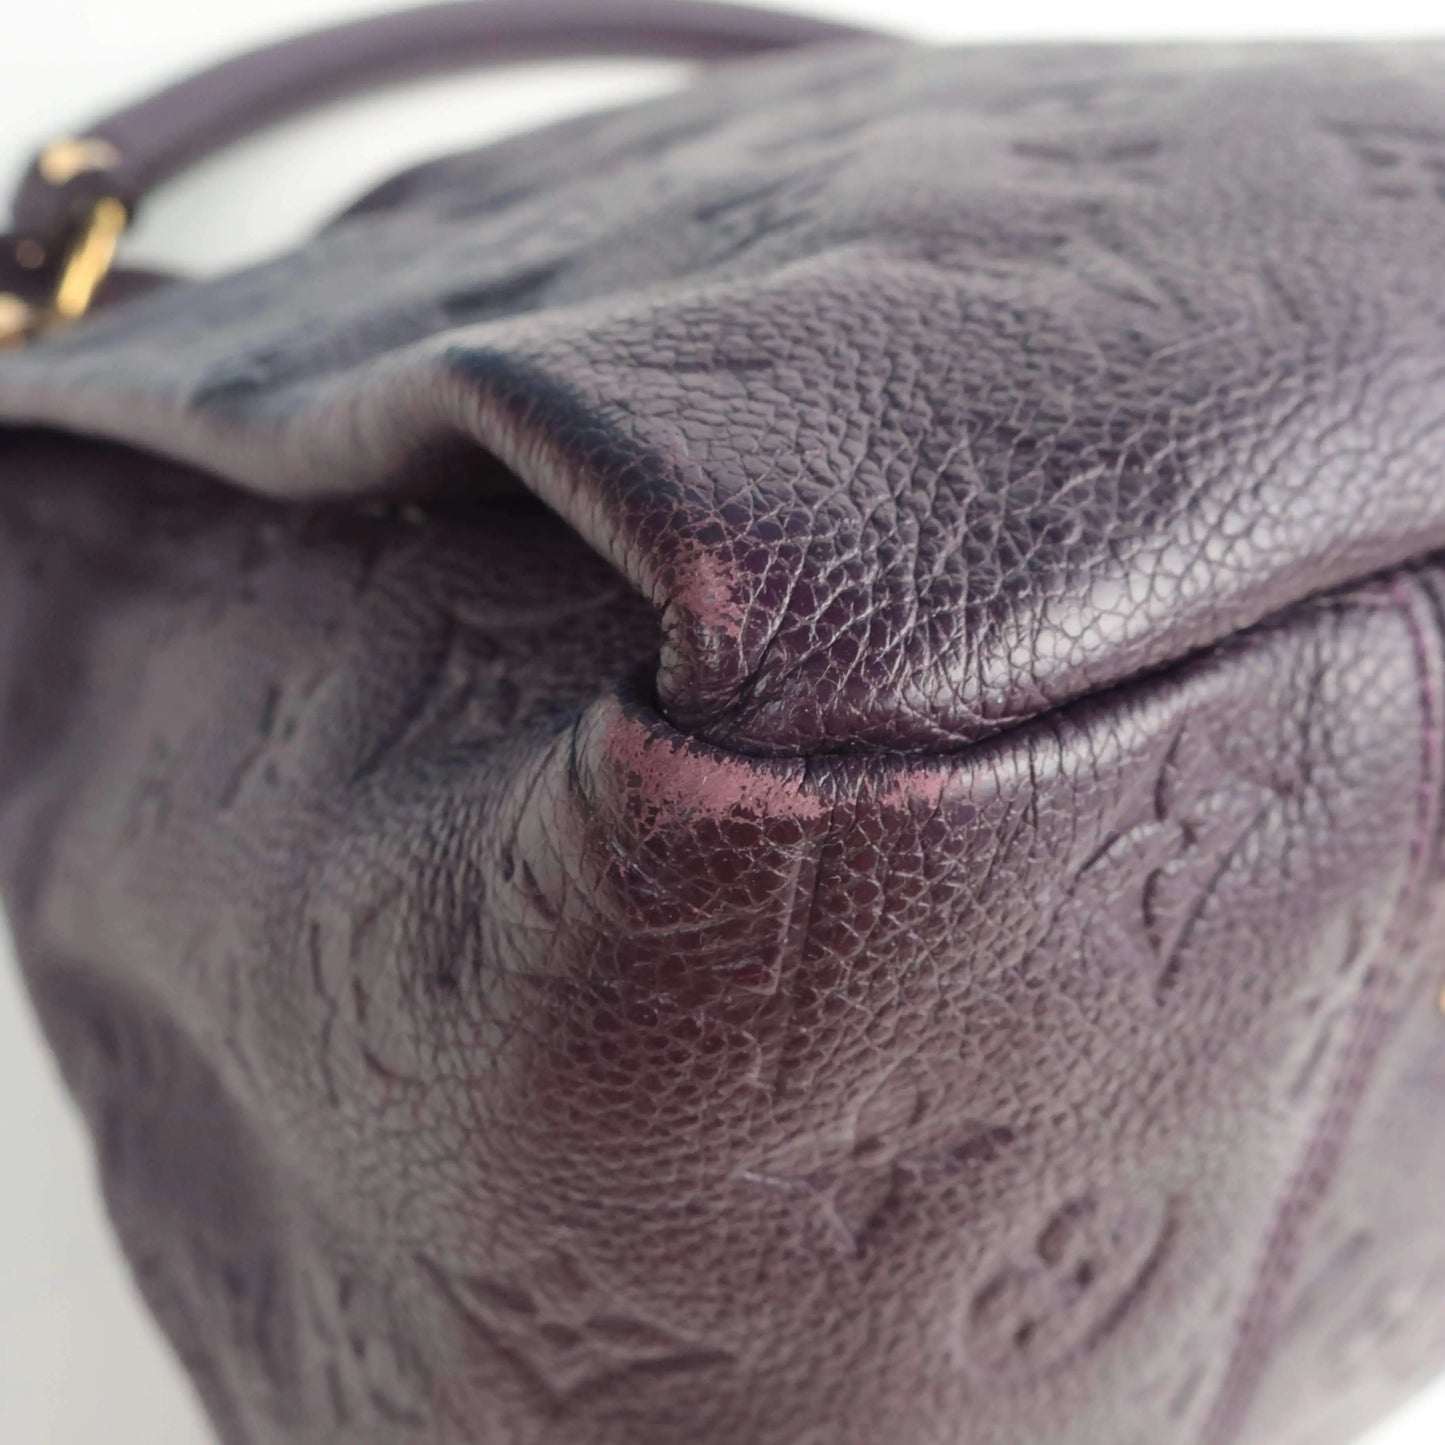 Louis Vuitton Aube Monogram Empreinte Leather Artsy MM Bag at